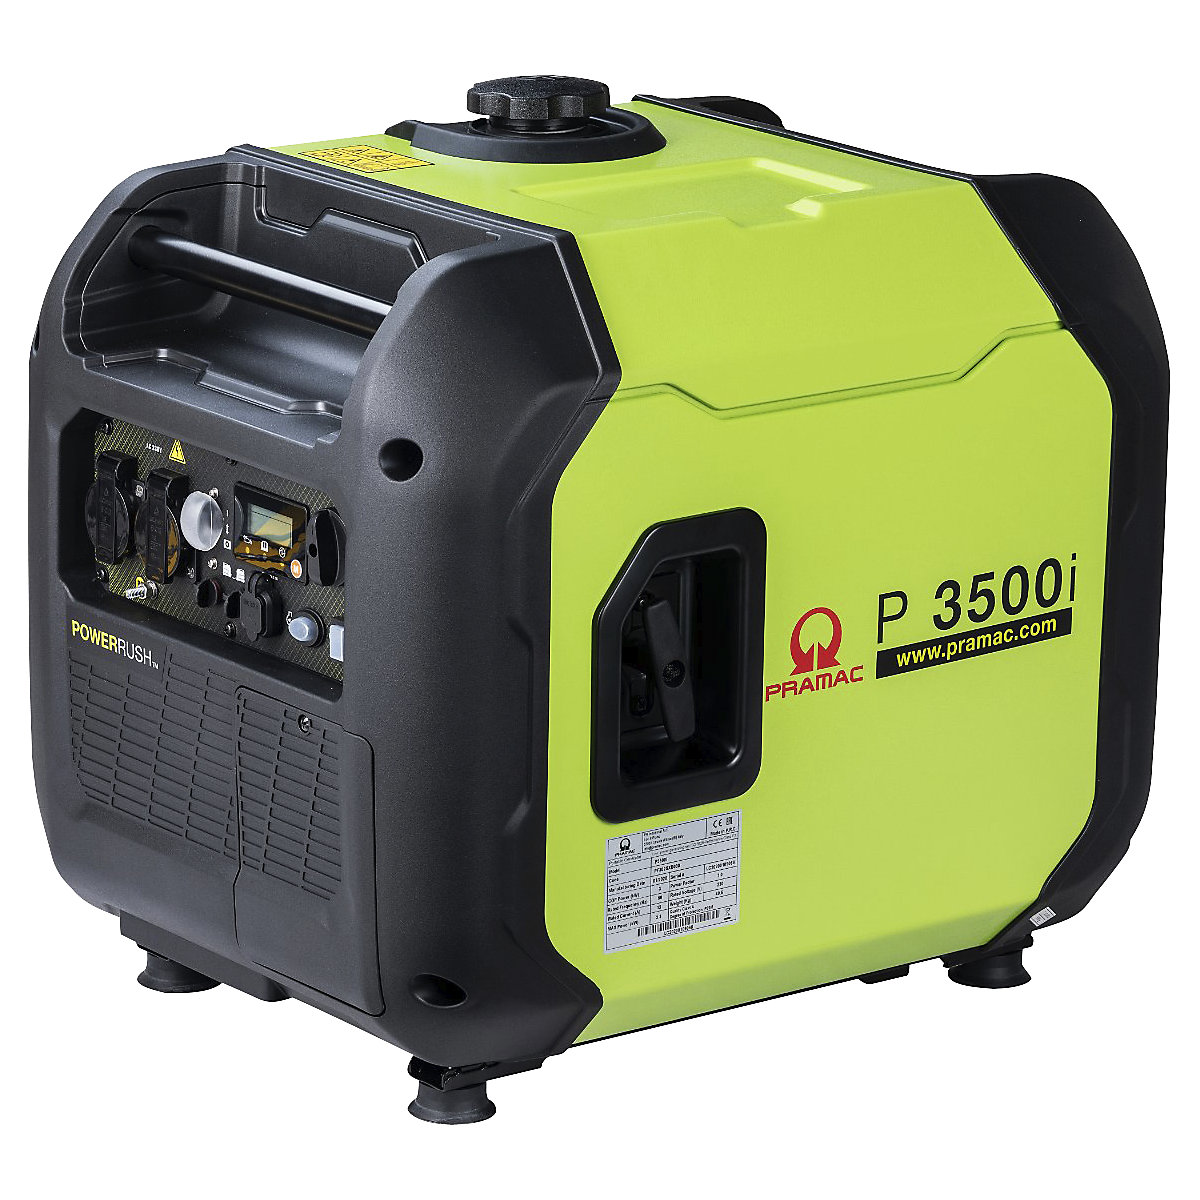 Inverter Stromerzeuger Pramac: P 3500i, Benzin, 230 V, Leistung max. 3300 W